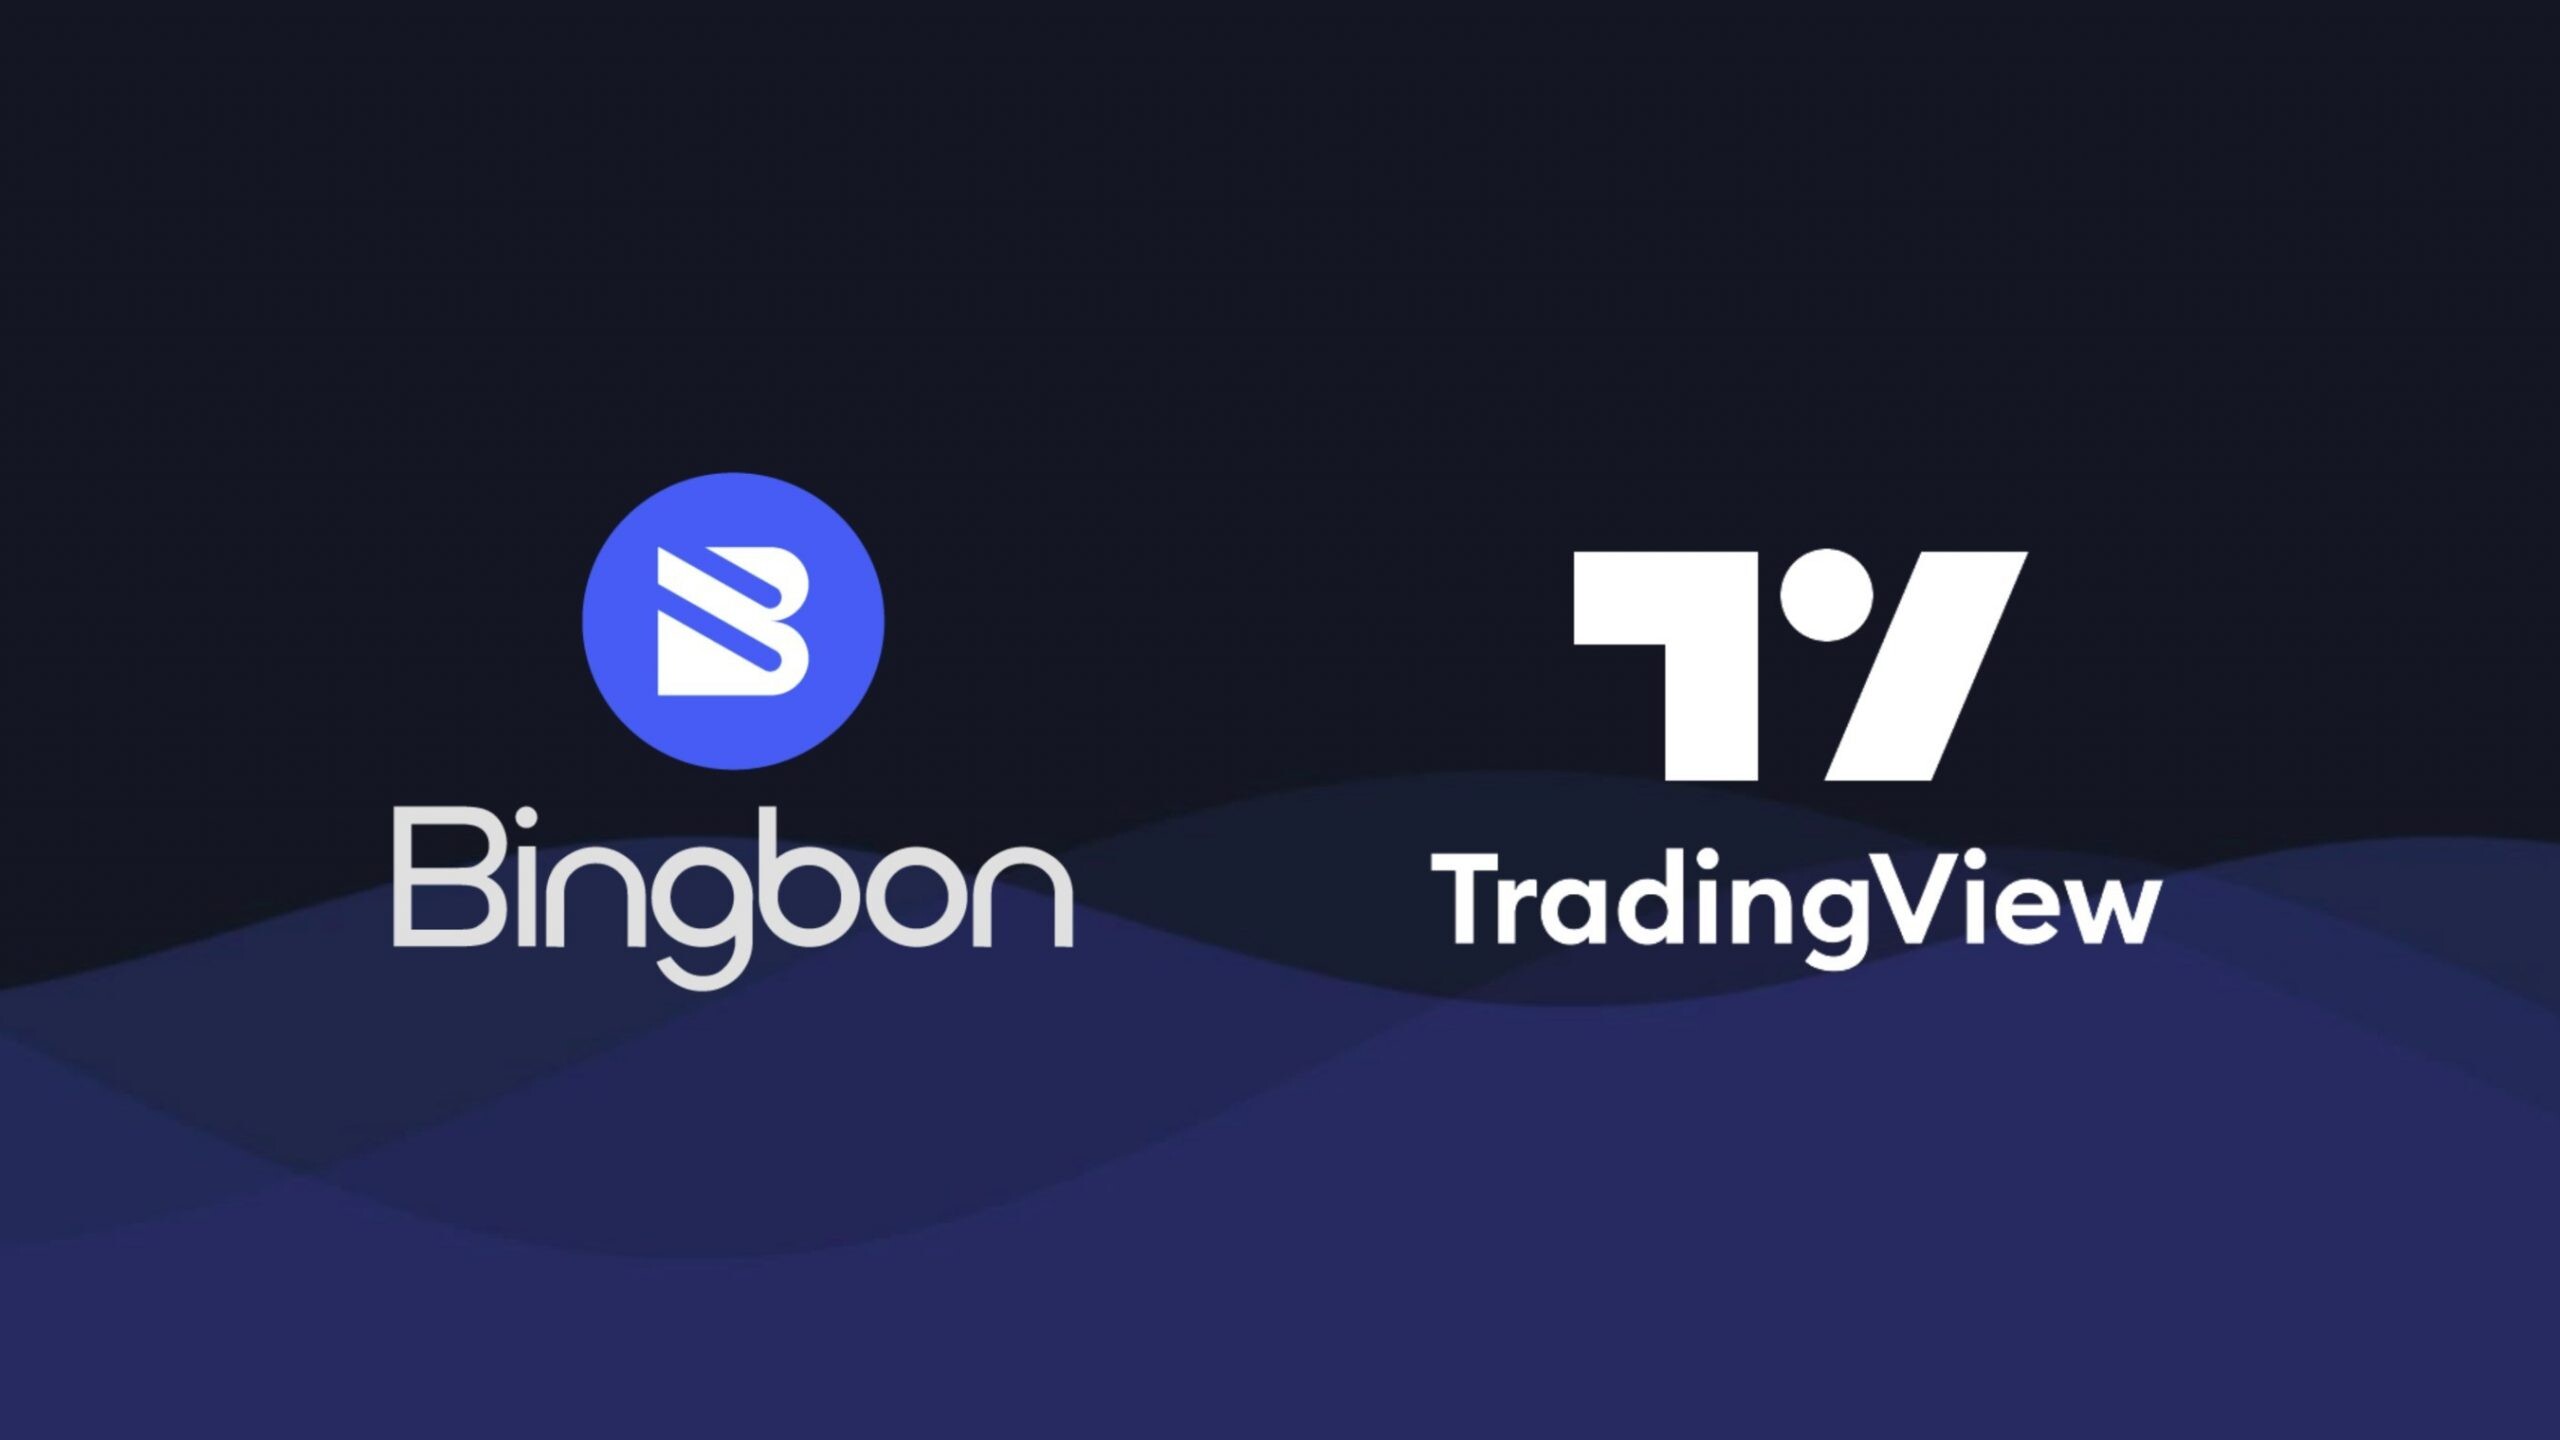 Bingbon ผสานรวมบริการเข้ากับ TradingView ขึ้นแท่นโบรกเกอร์รายล่าสุดบนแพลตฟอร์ม TradingView